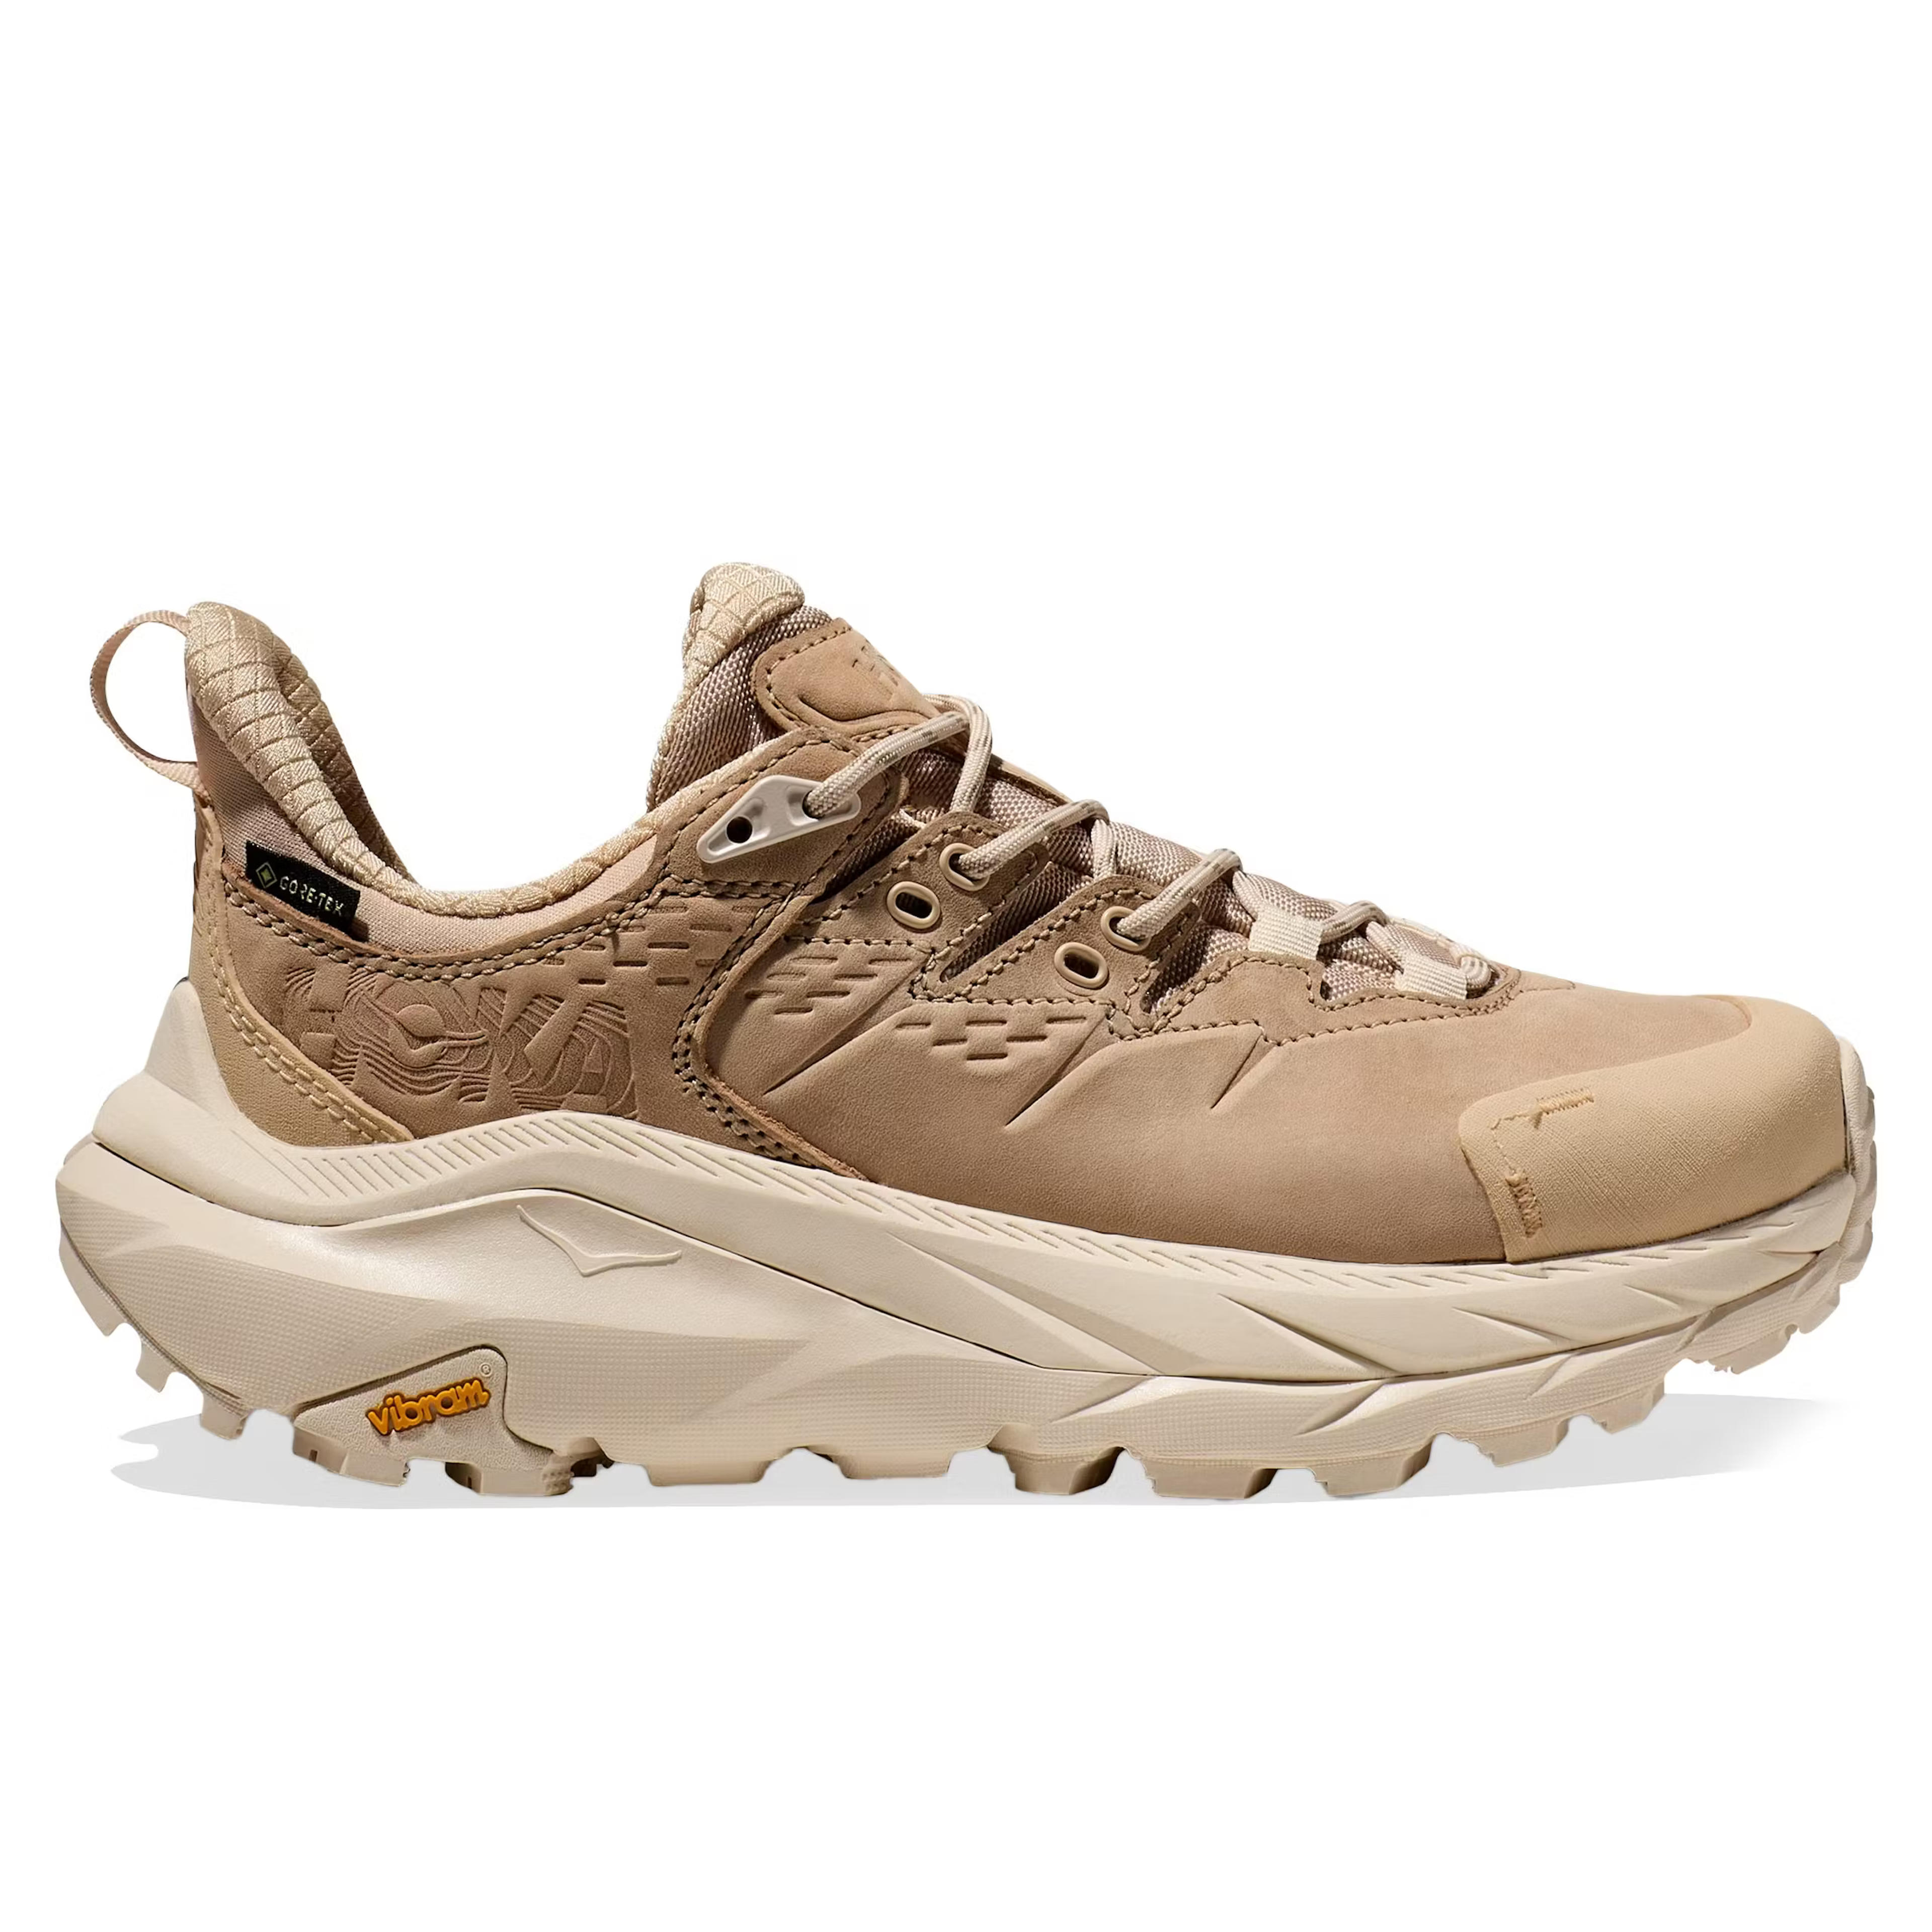 Hoka Kaha 2 Low GTX Hiking Shoe - Shifting Sand/Eggnog | Trail Sneakers | Huckberry